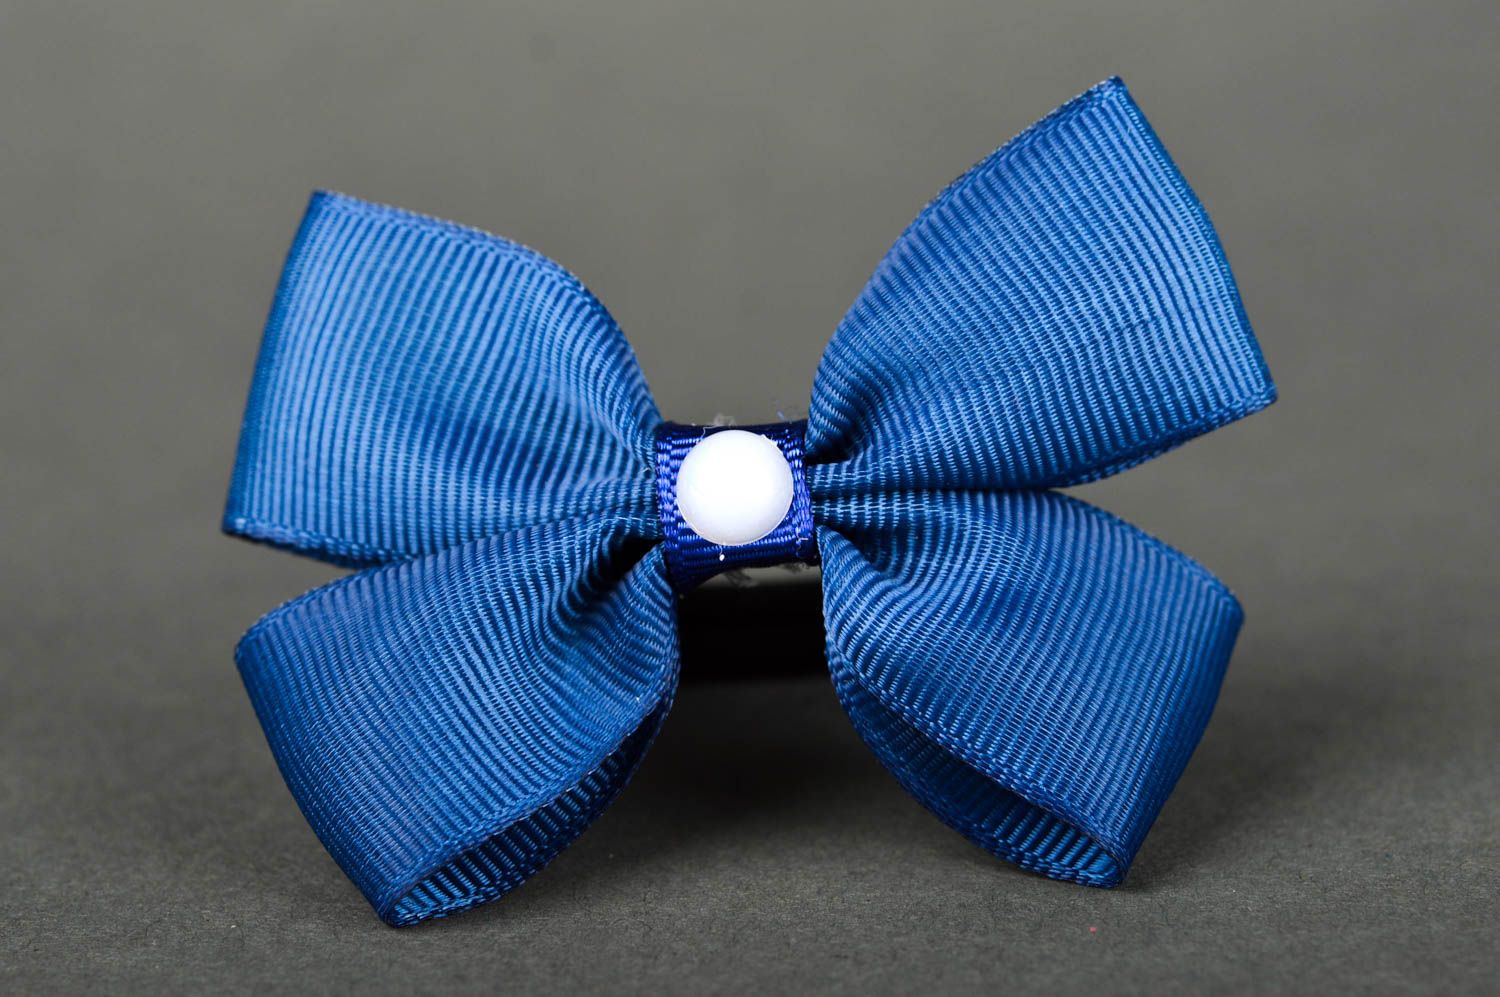 Handmade blue cute hair tie stylish unusual designer hair tie accessory for kids photo 3